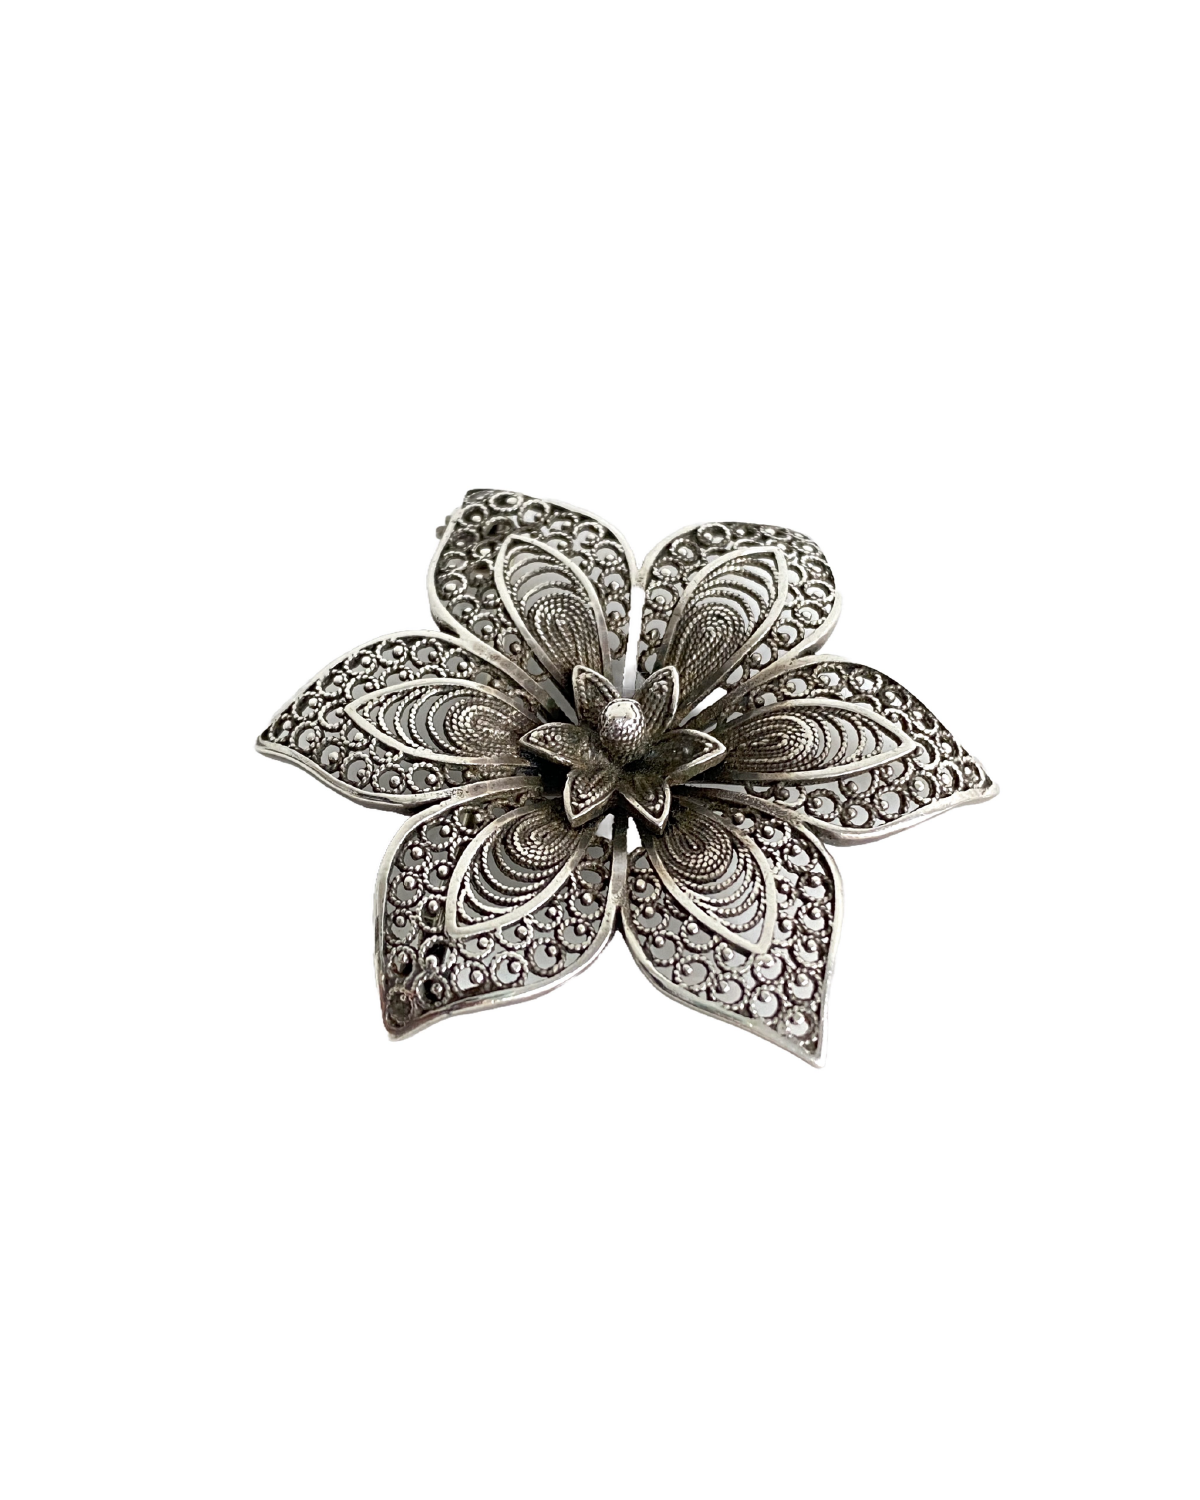 Vintage Silver Filigree Flower Brooch